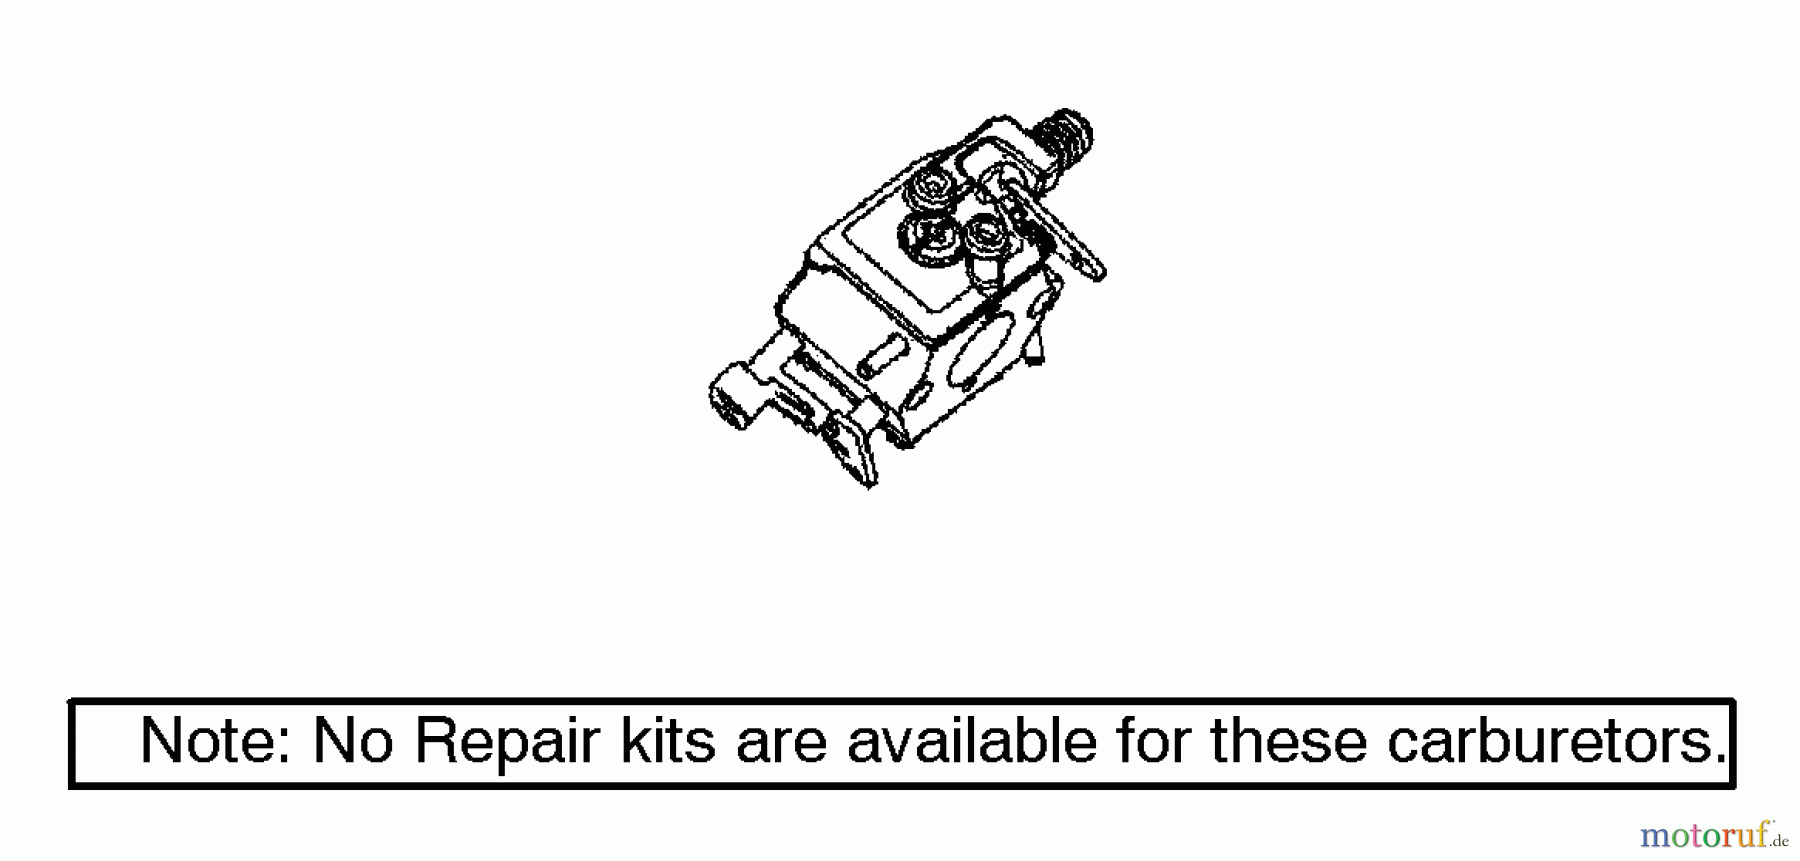  Poulan / Weed Eater Motorsägen 2050 (Type 6) - Poulan Pioneer Chainsaw Carburetor Assembly Kits 530071620/530071820/530071821